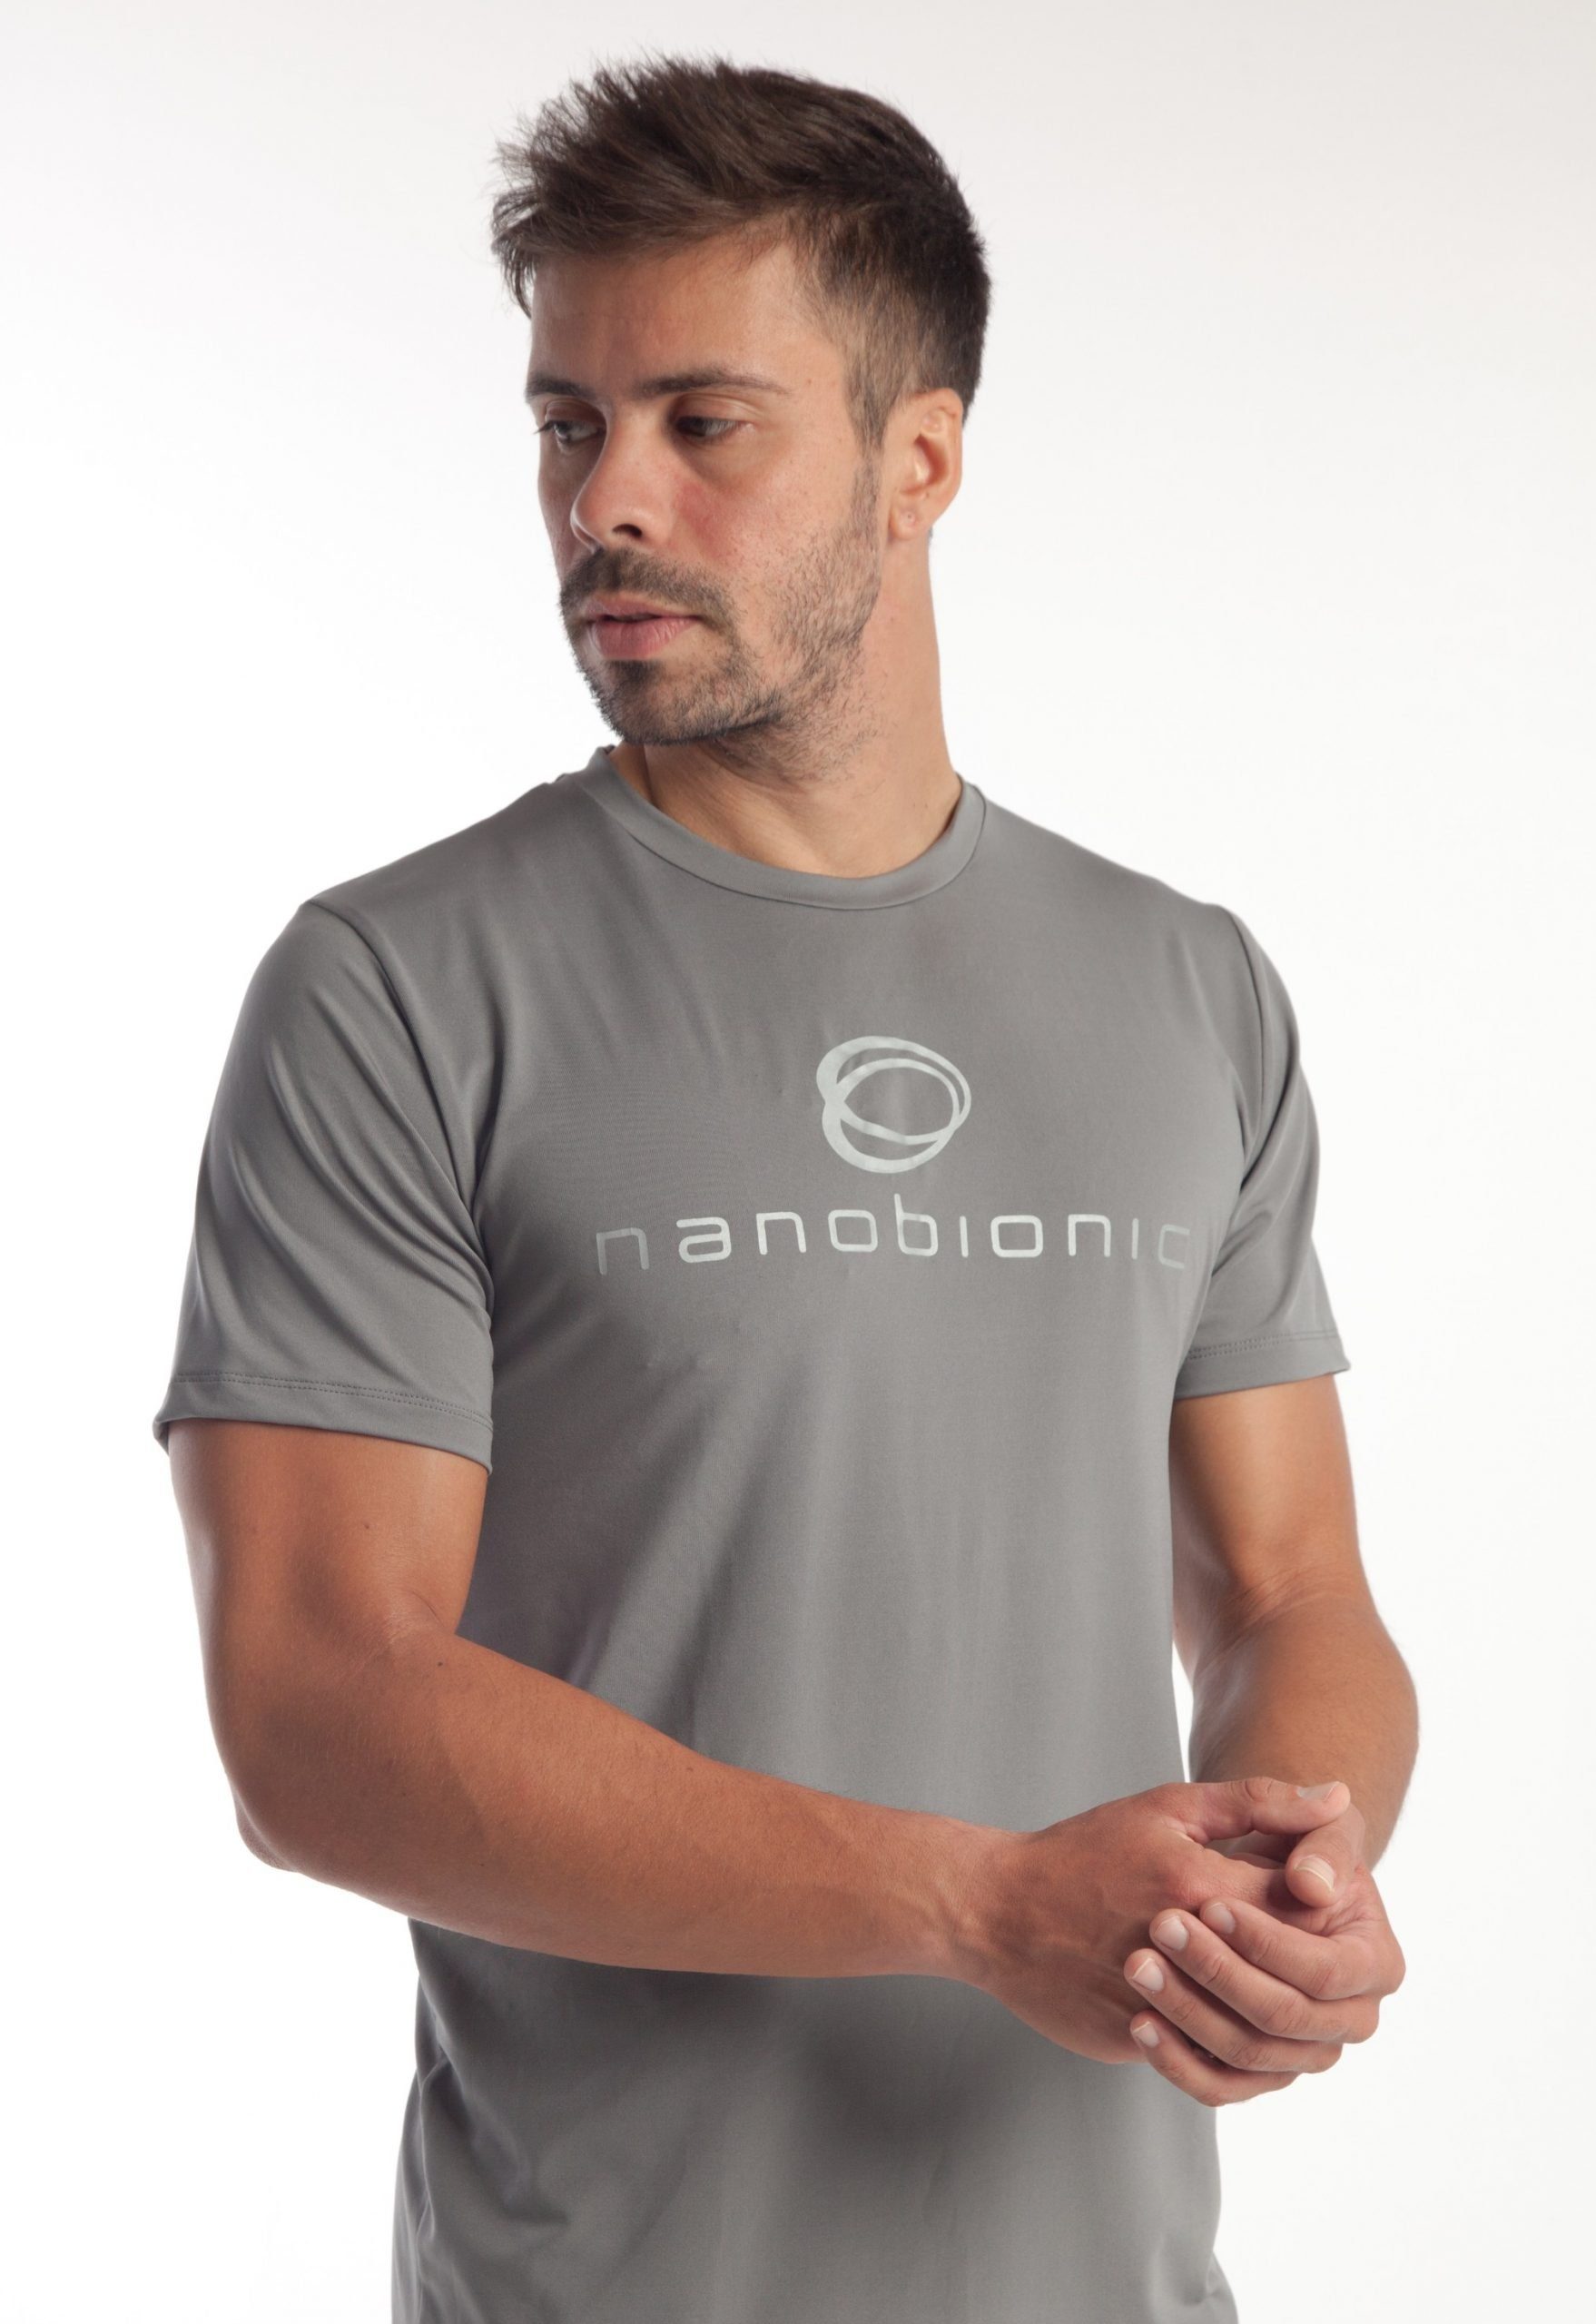 NANOBIONIC® Funktionsshirt Nanobionic® Iconic T-shirt (grau/silber) (Innovative und exklusive NANOBIONIC®-Technologie, NASA I-Tech Award) NANOBIONIC® - eine nahezu endlose Energiequelle!!, www.nanobionic.de